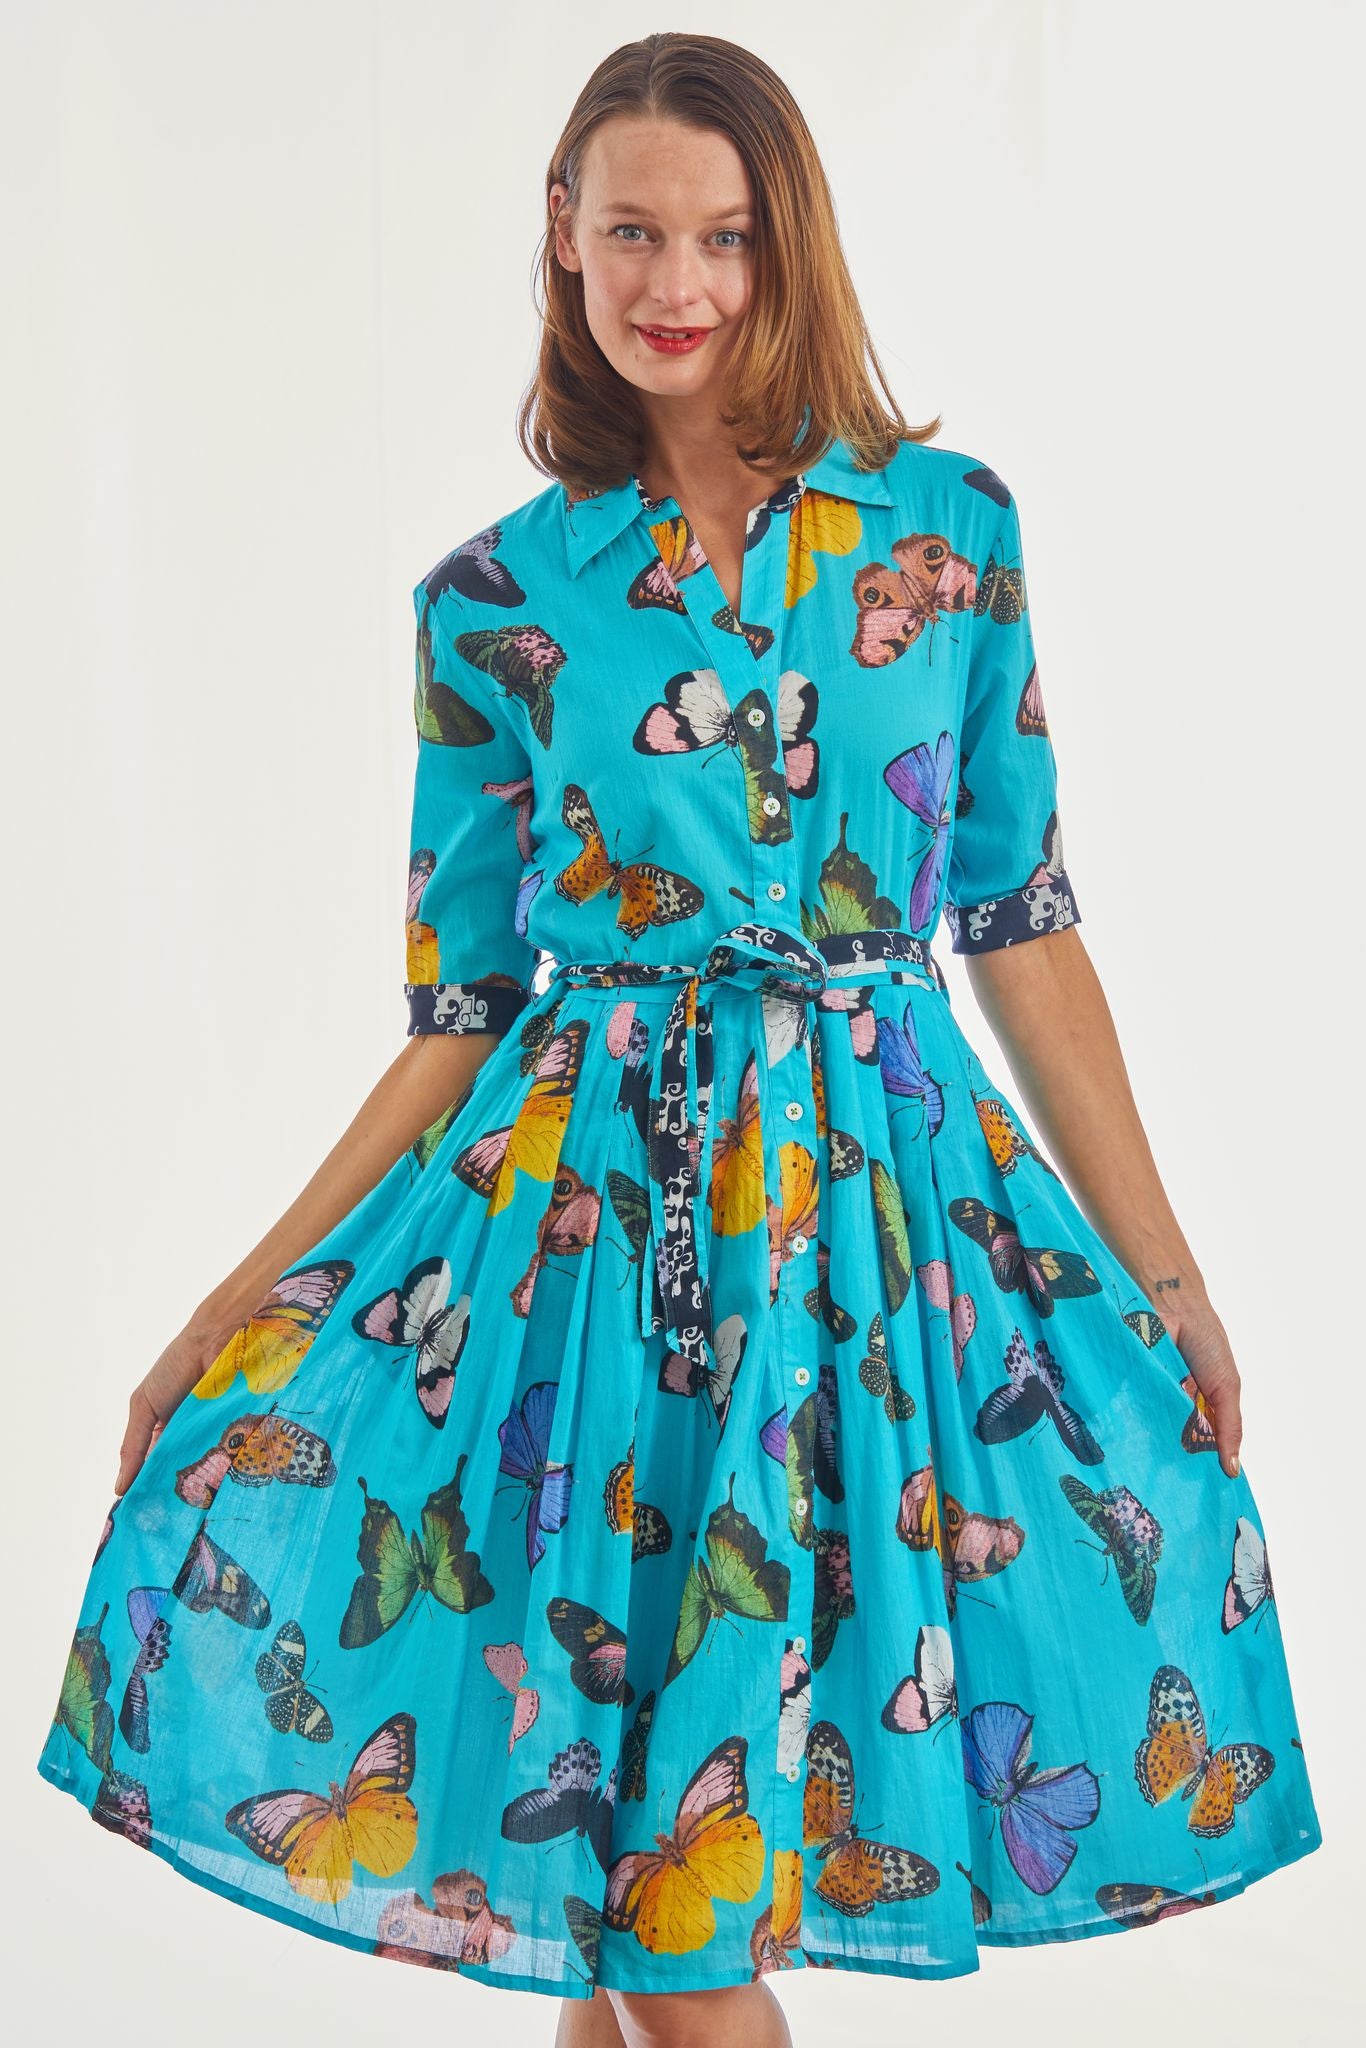 Mrs Maisel Dress Turquoise  Butterflies